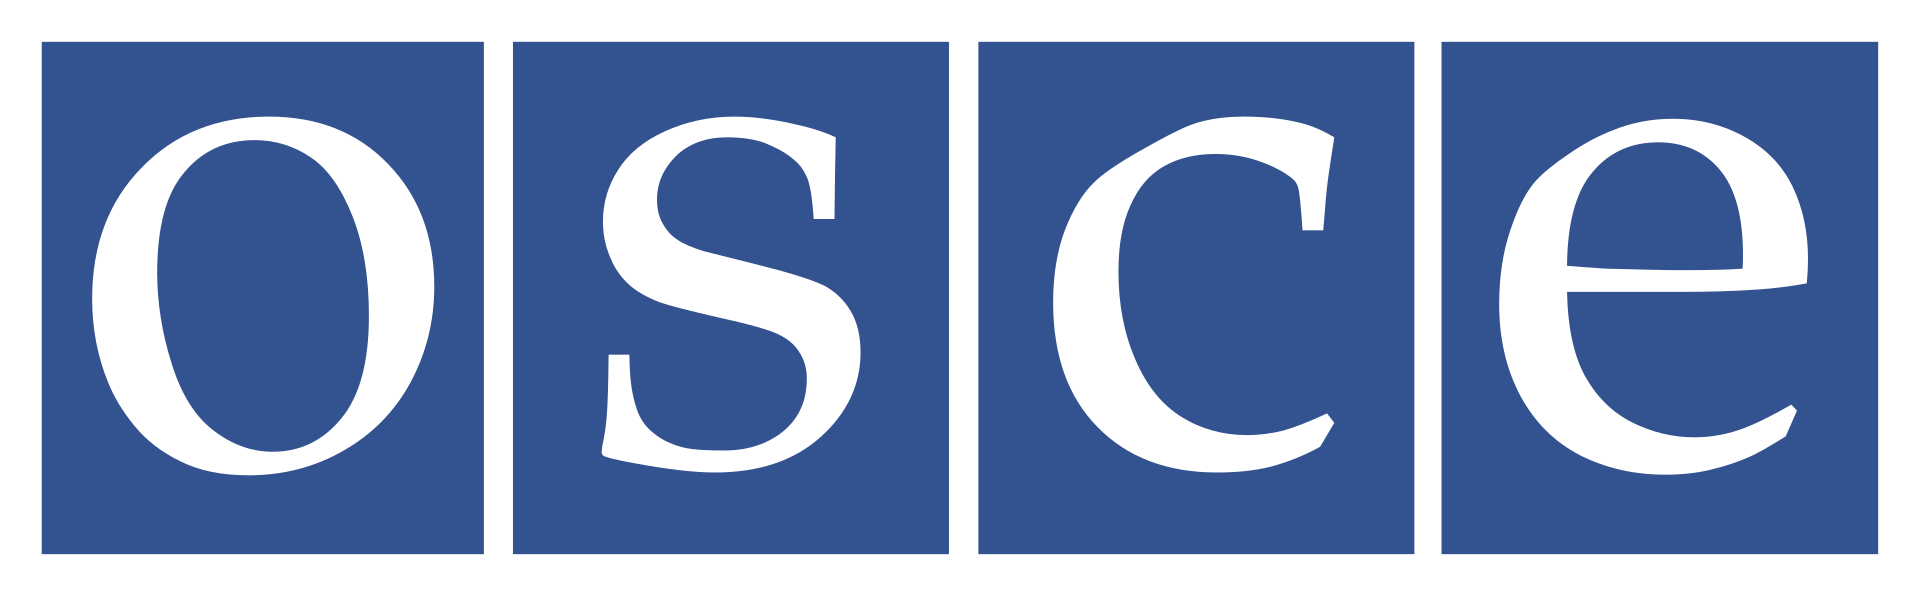 ОБСЕ - Организация по безопасности и сотрудничеству в Европе - OSCE - The Organization for Security and Co-operation in Europe